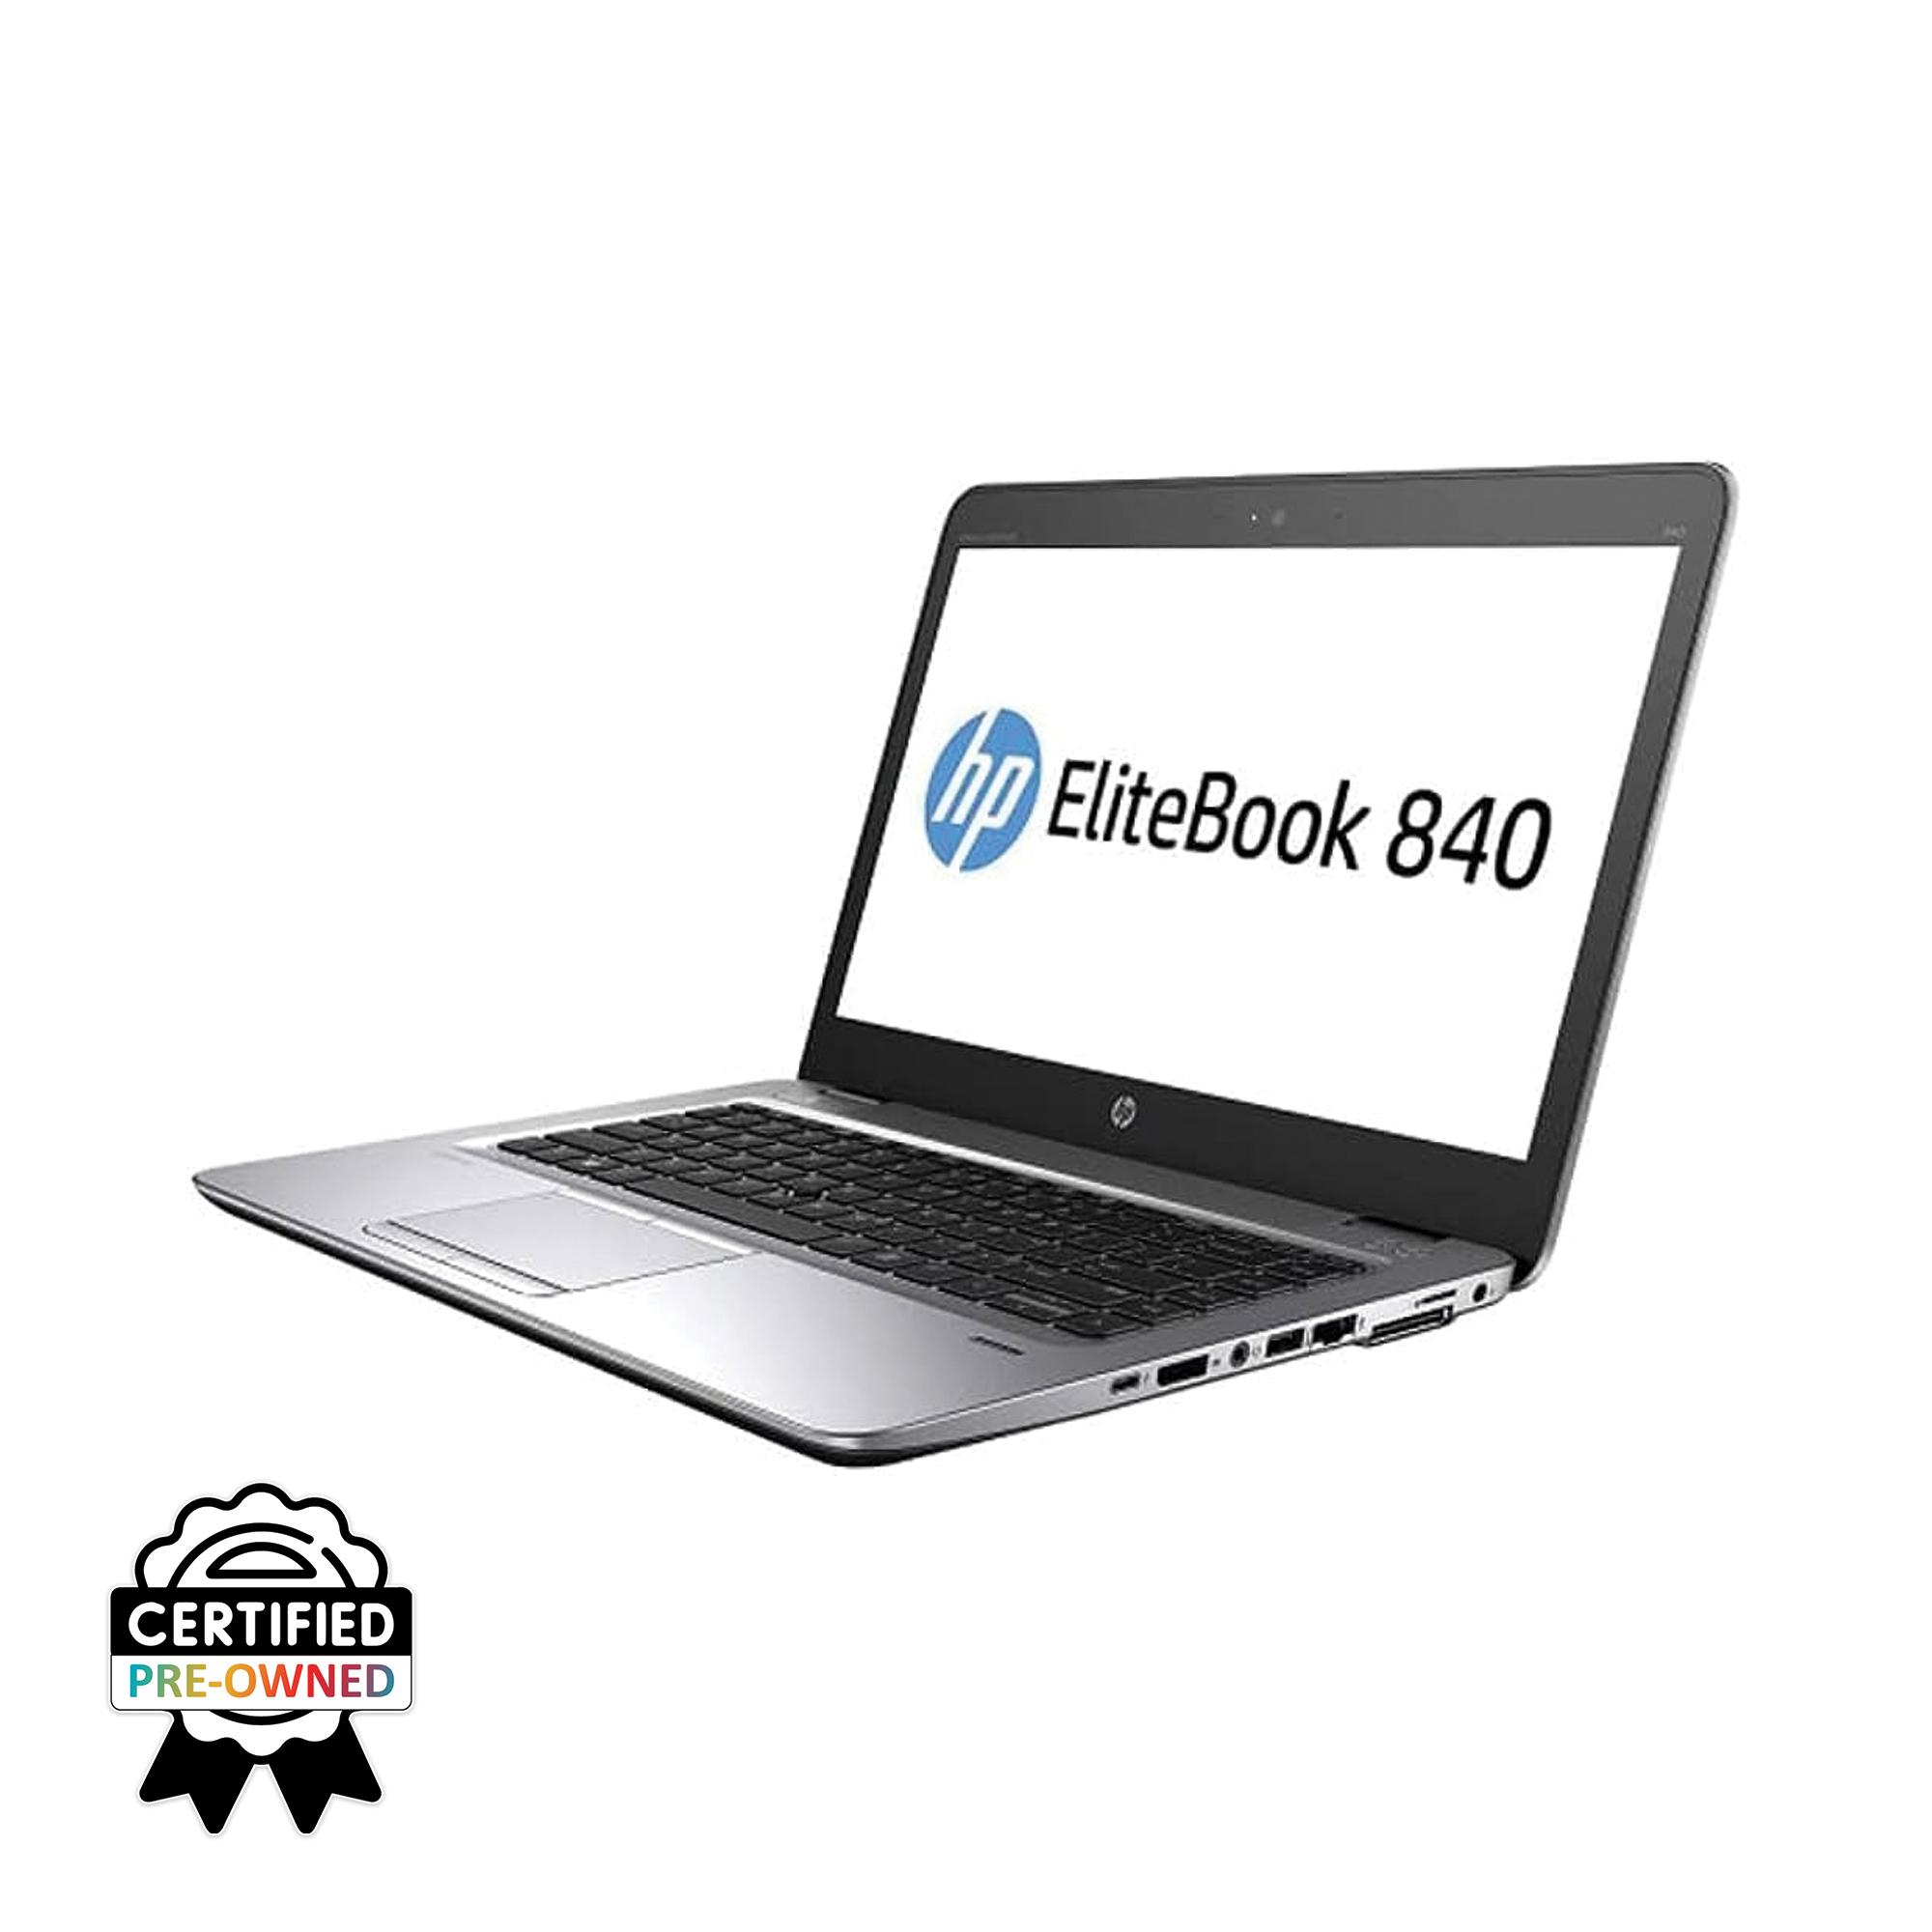 HP Elitebook 840 G4 i5 7th gen 8GB 256GB SSD